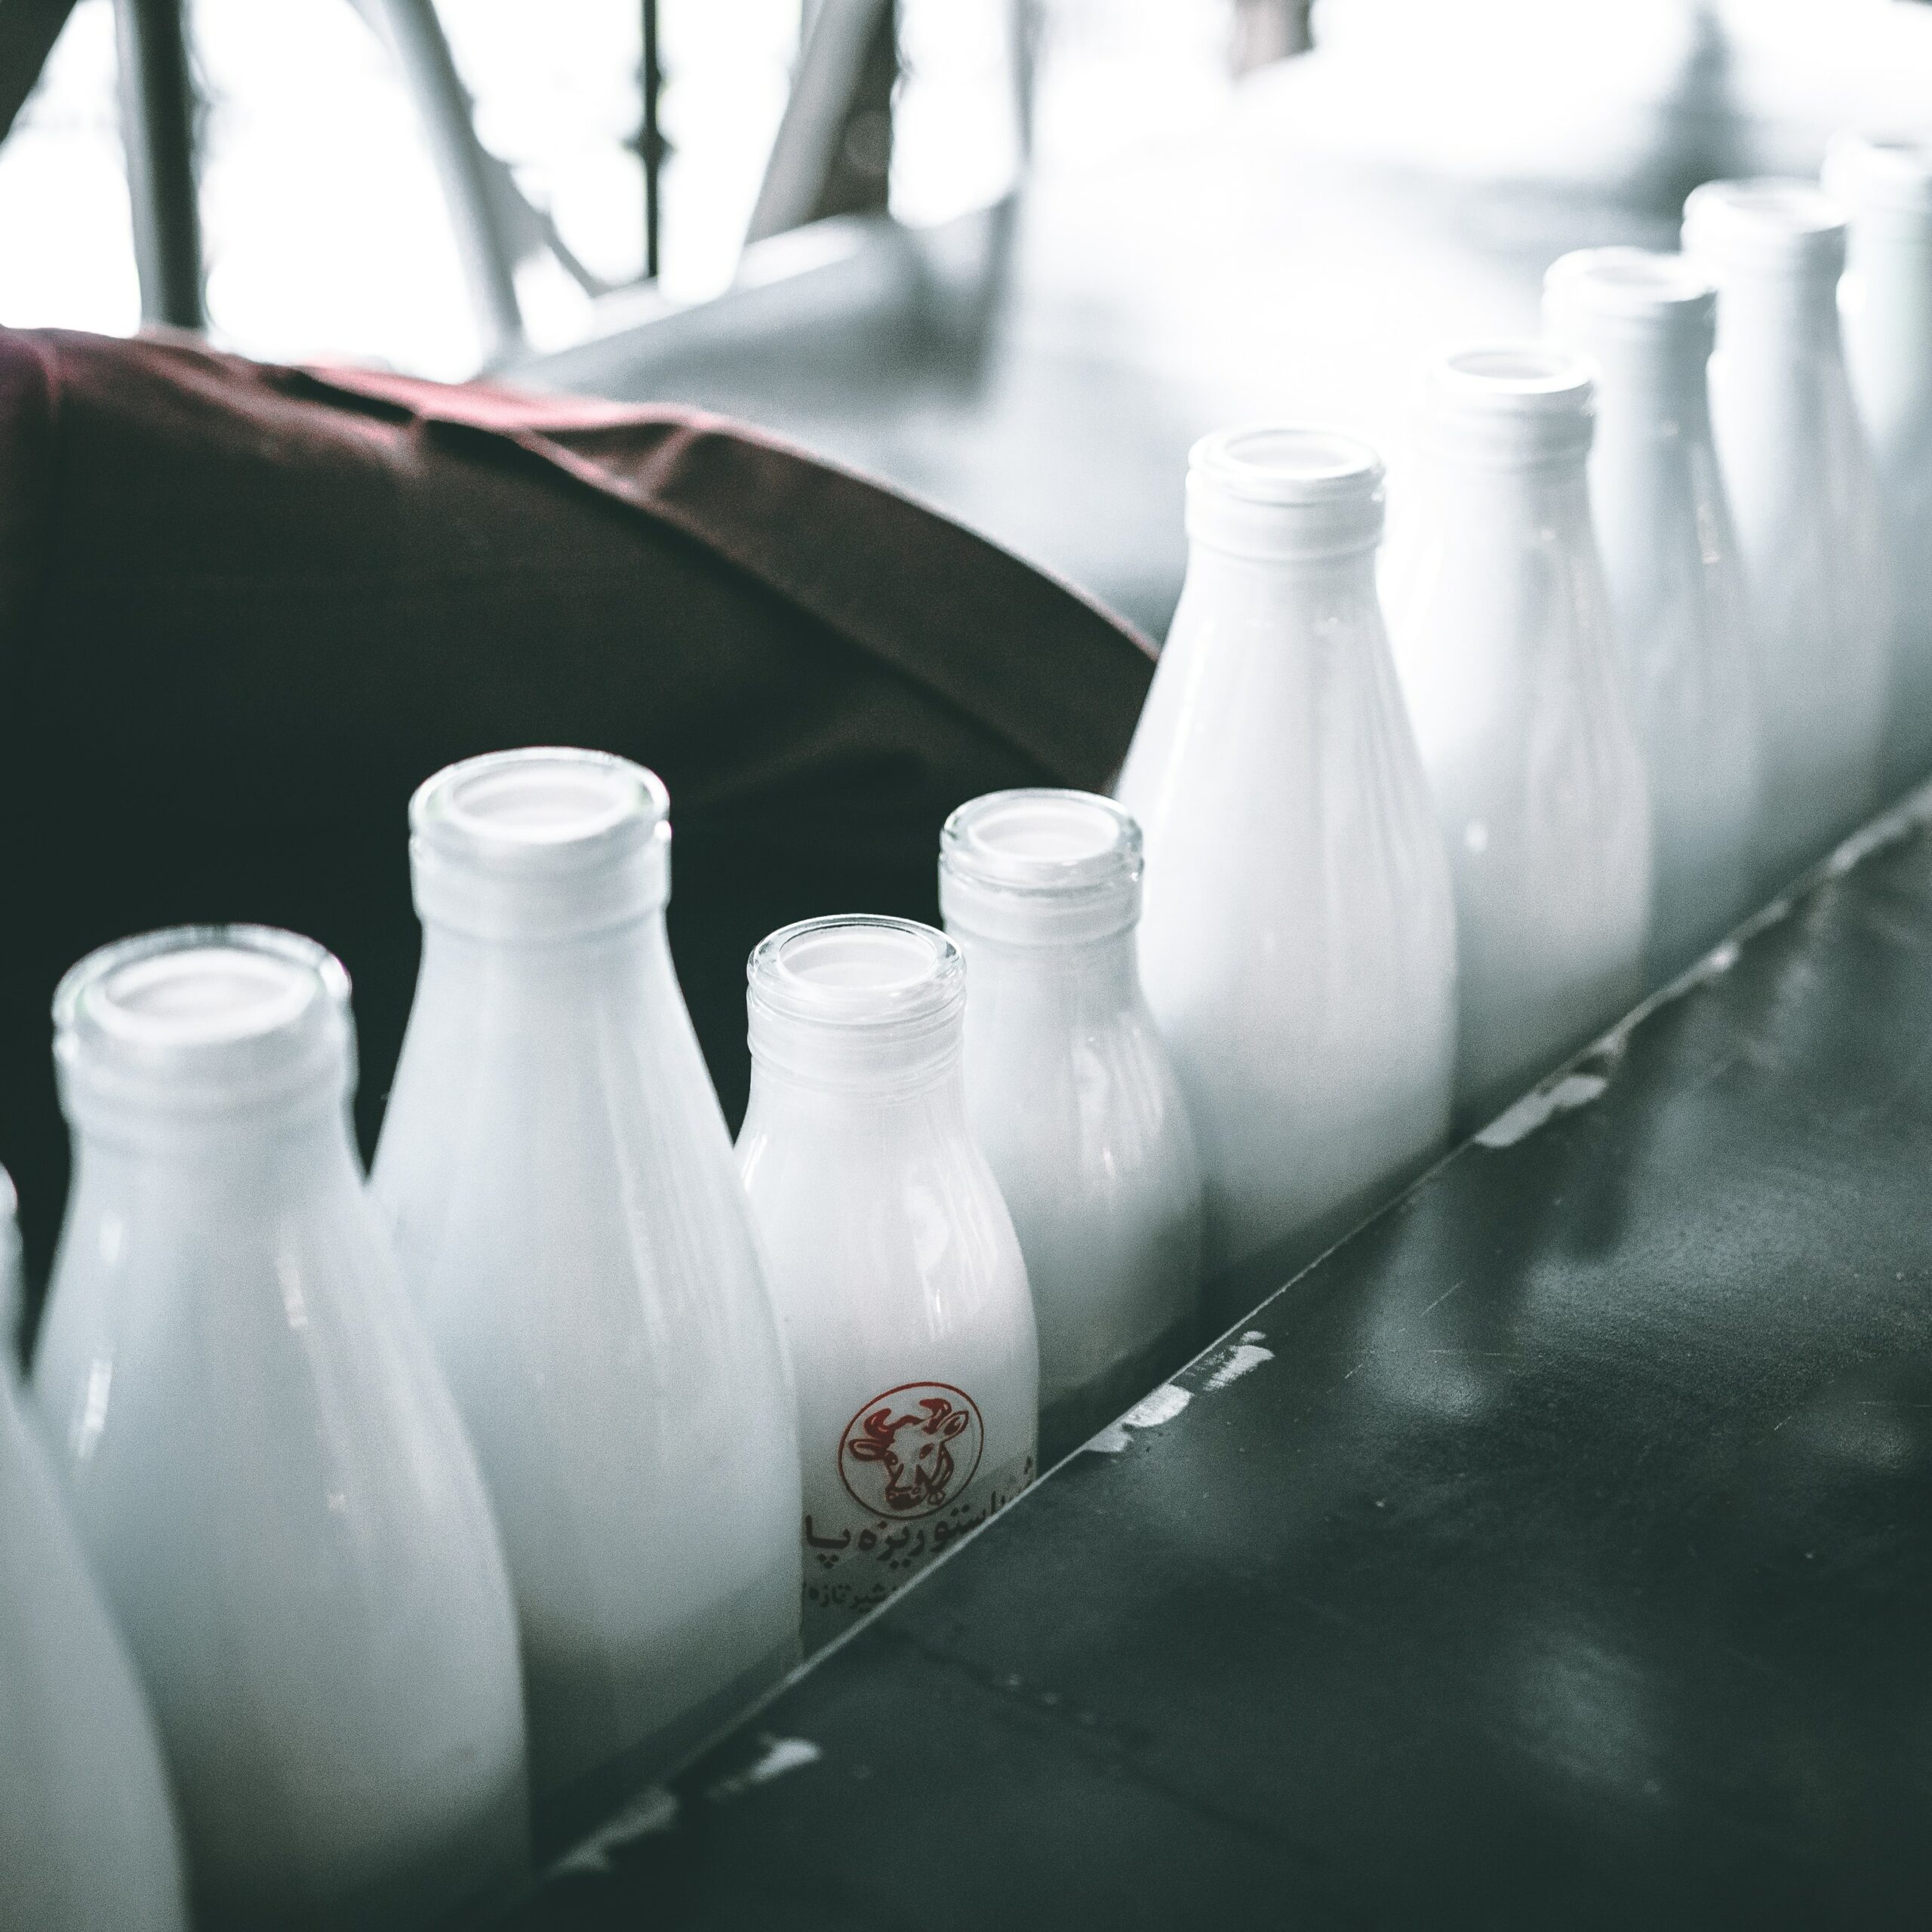 Plant-based milk alternatives in schools? Yes, please!